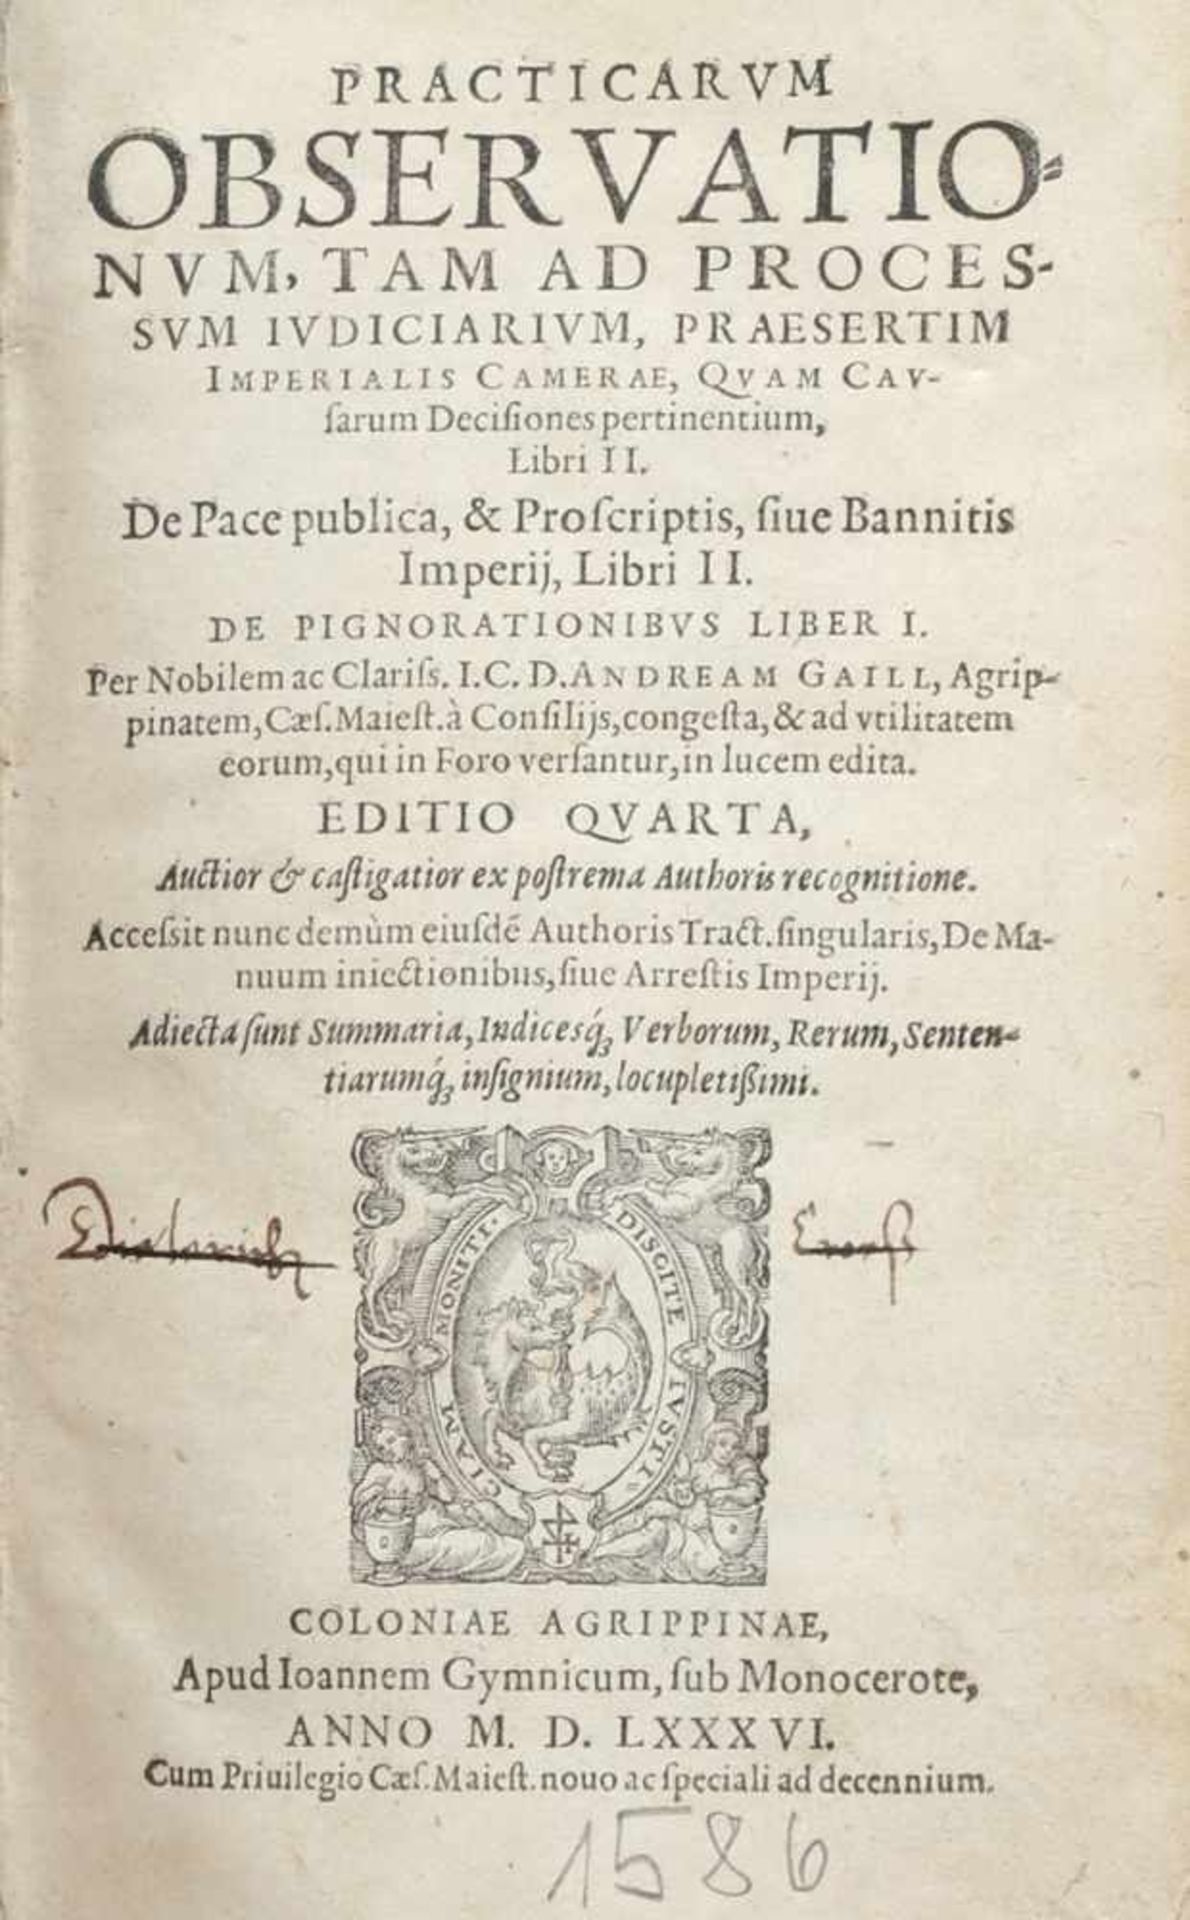 Andreas Gail - "Practicarum Observationum... " - Köln, Gymnicum 1586. Gepr. Ldr. Dreifacher roter